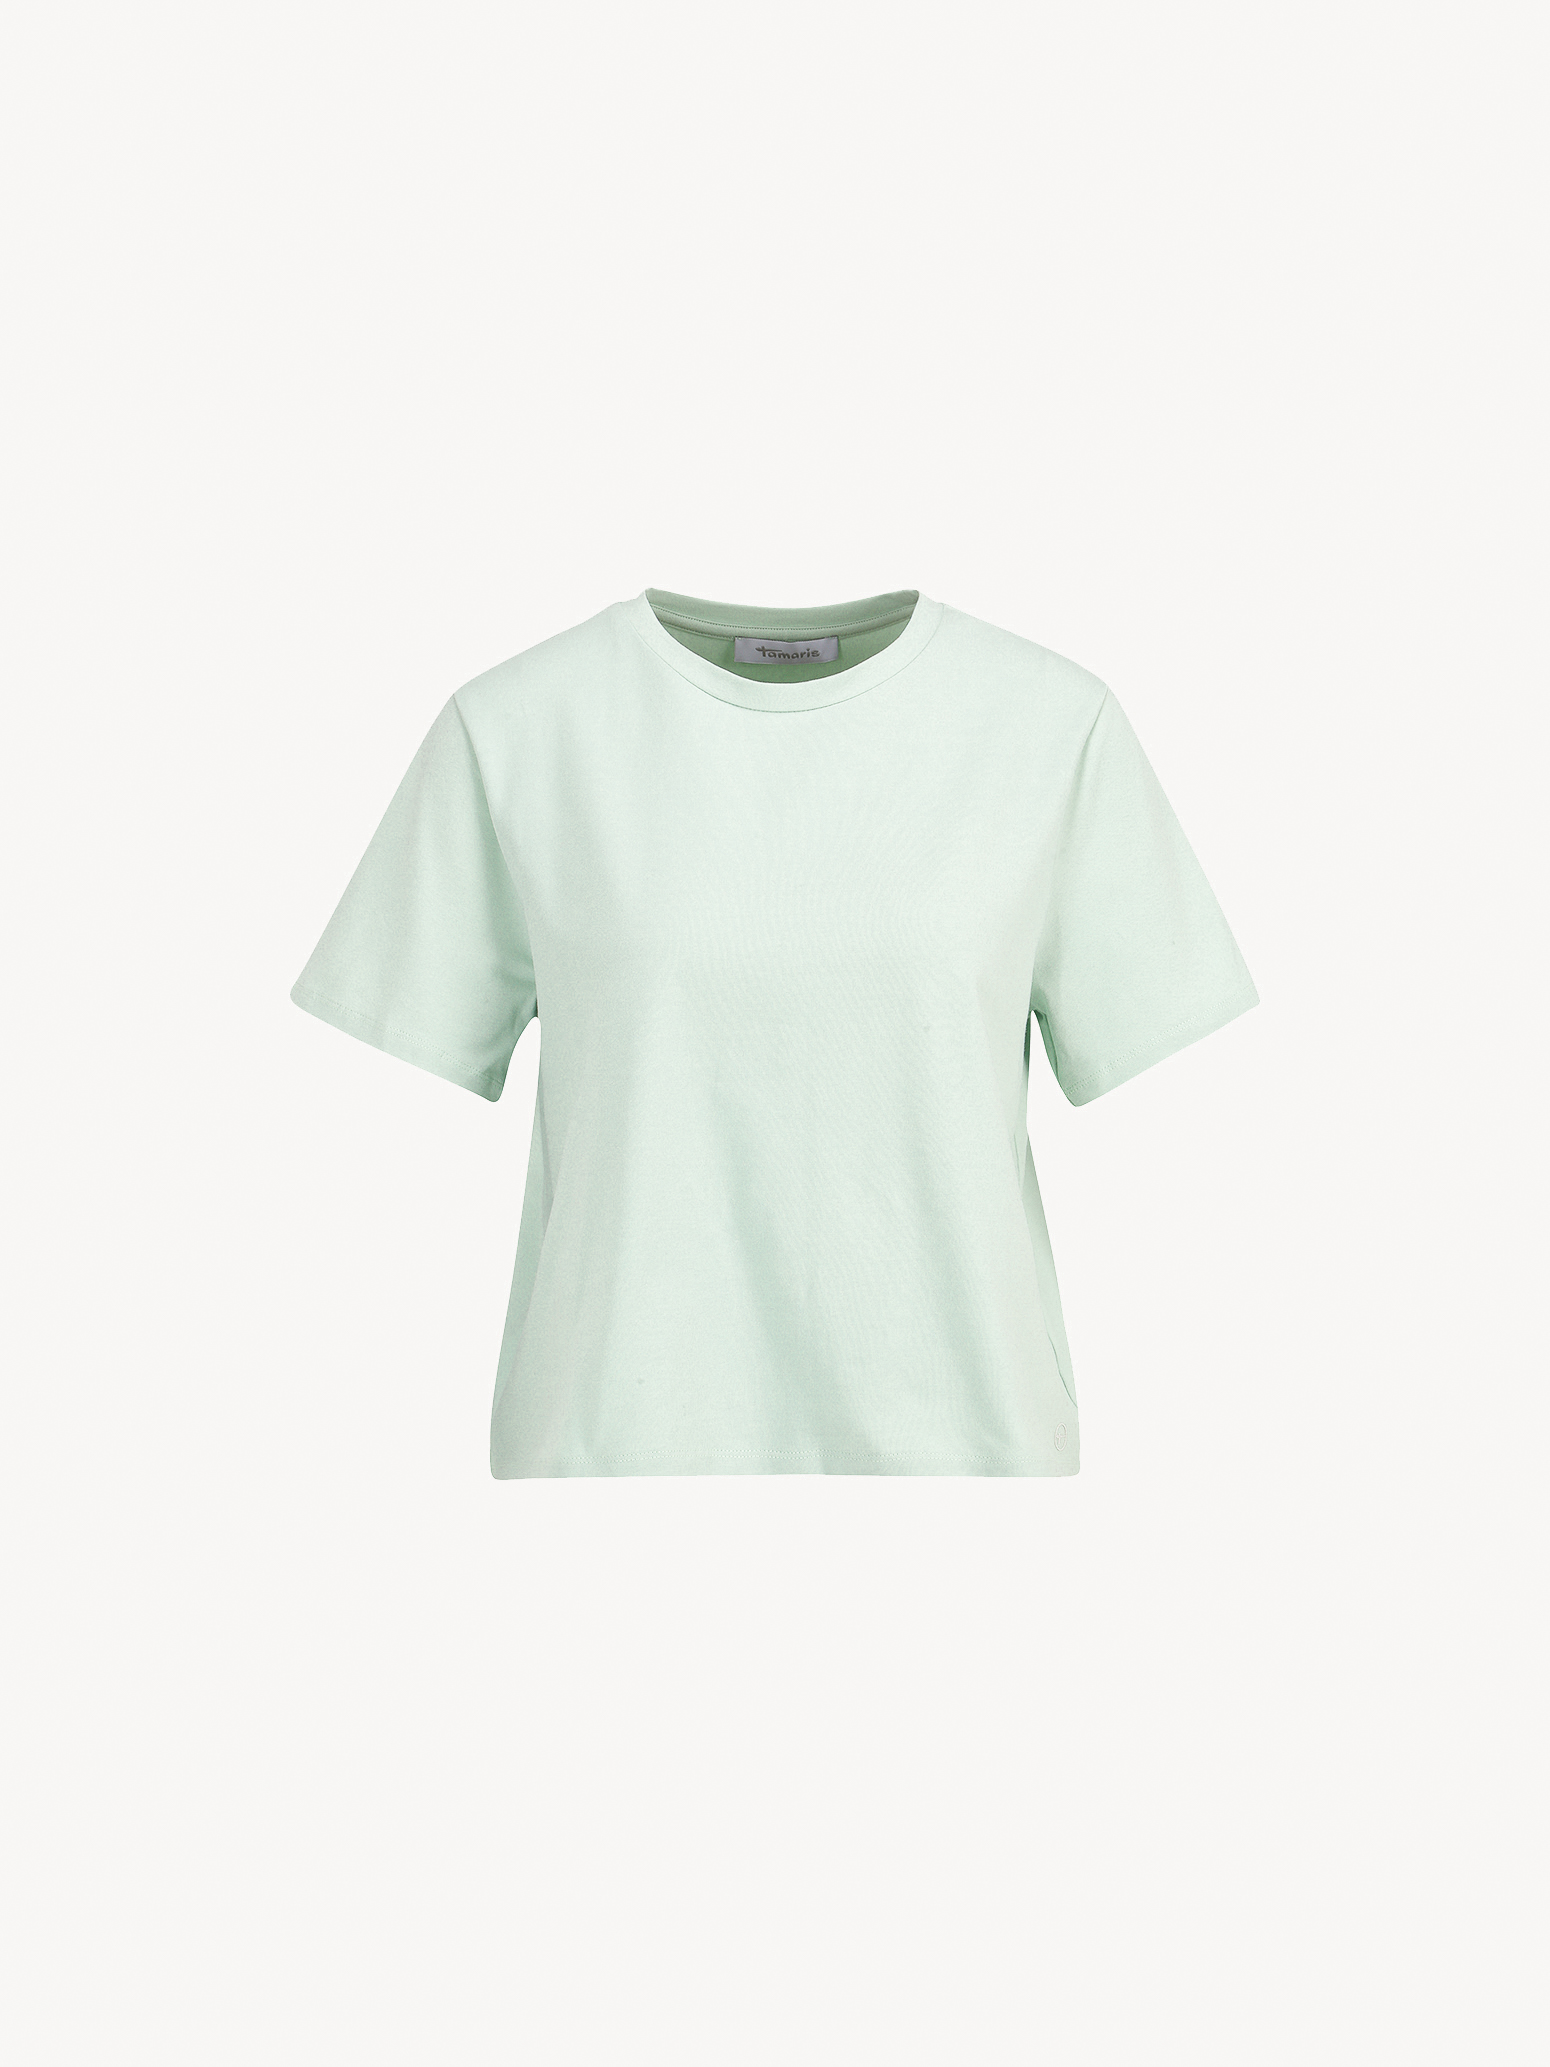 Oversized T-shirt - green, Gossamer Green, hi-res